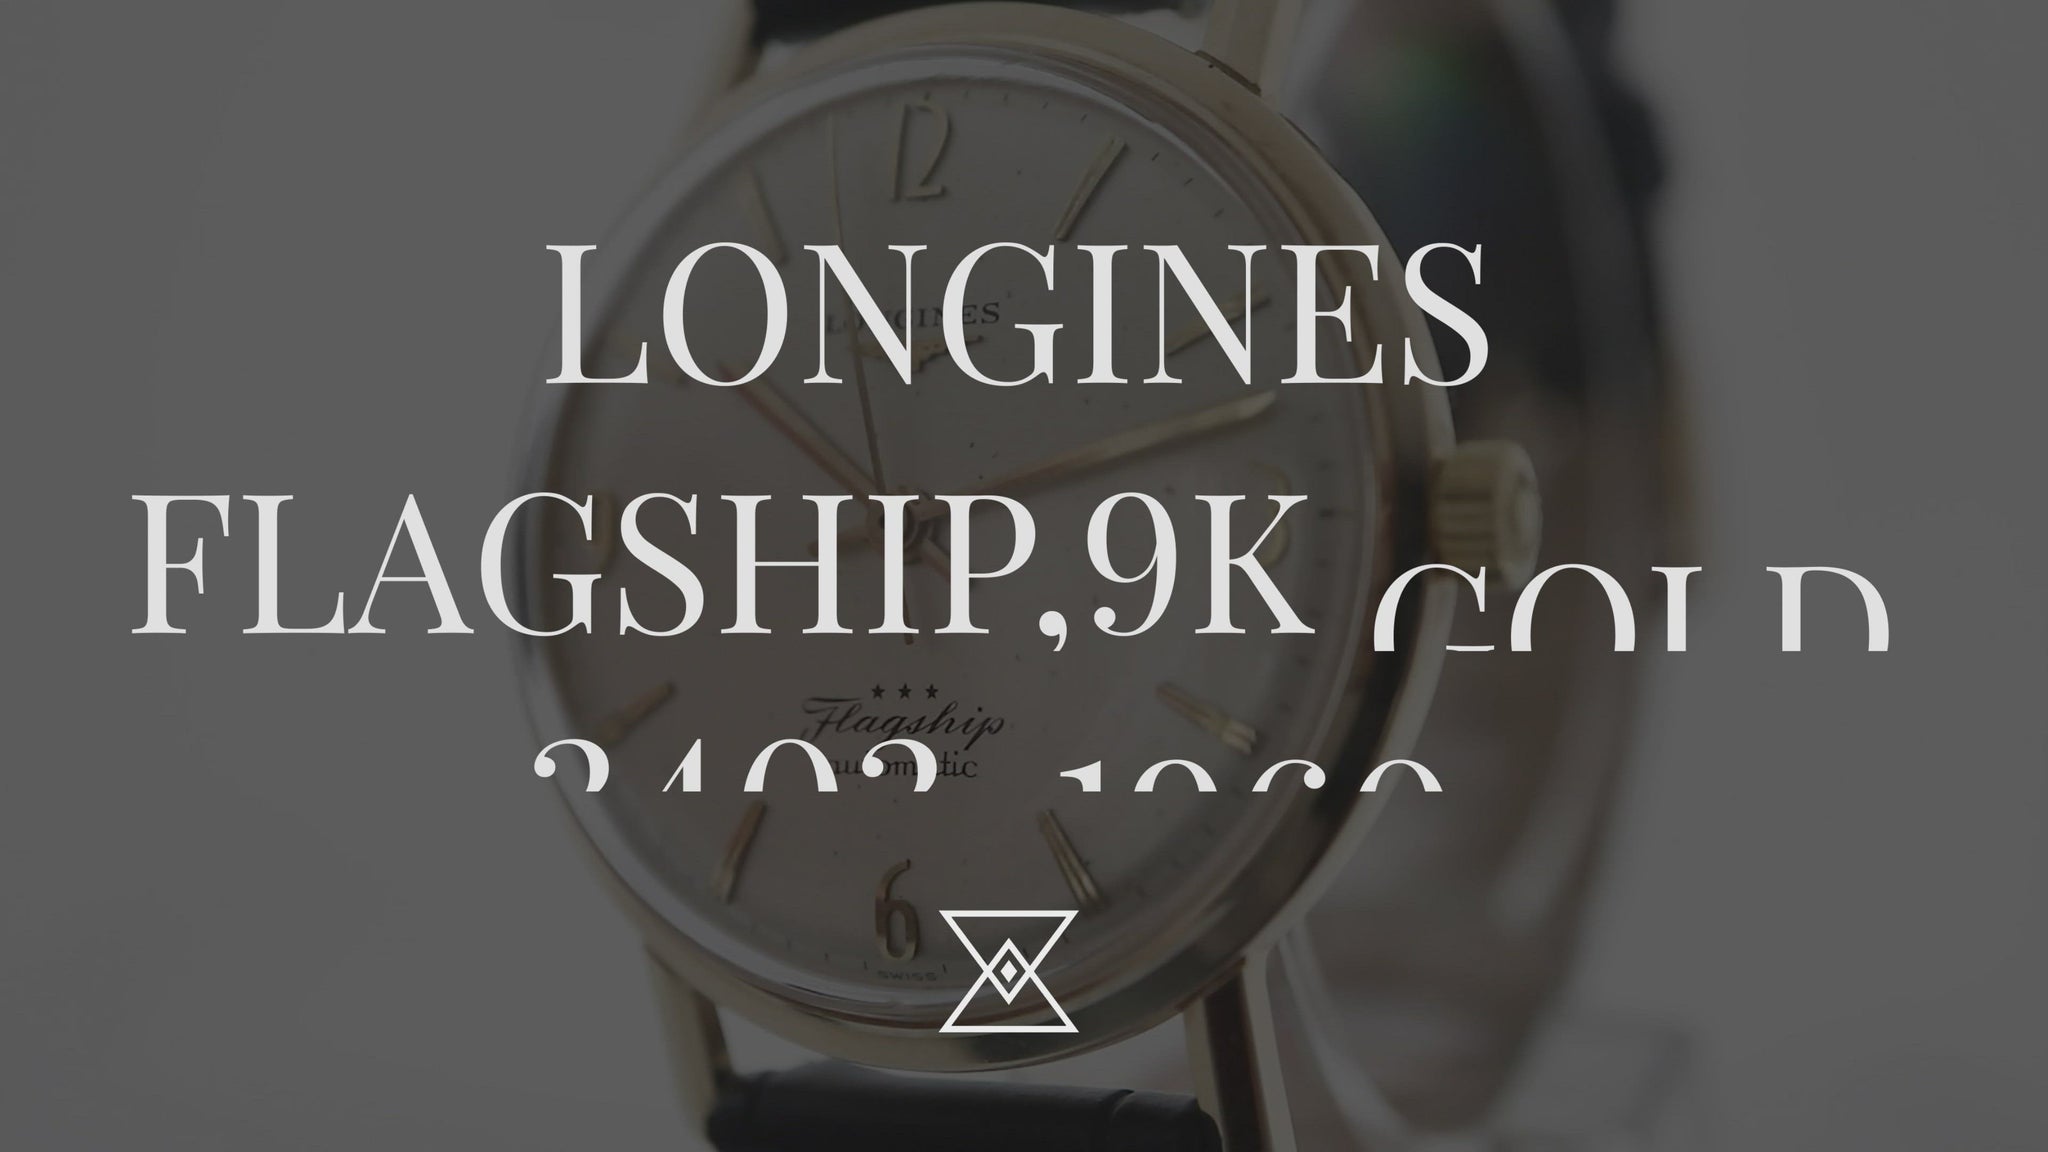 Longines Flagship 3403, 9k Gold, 1960 Vintage Watch video